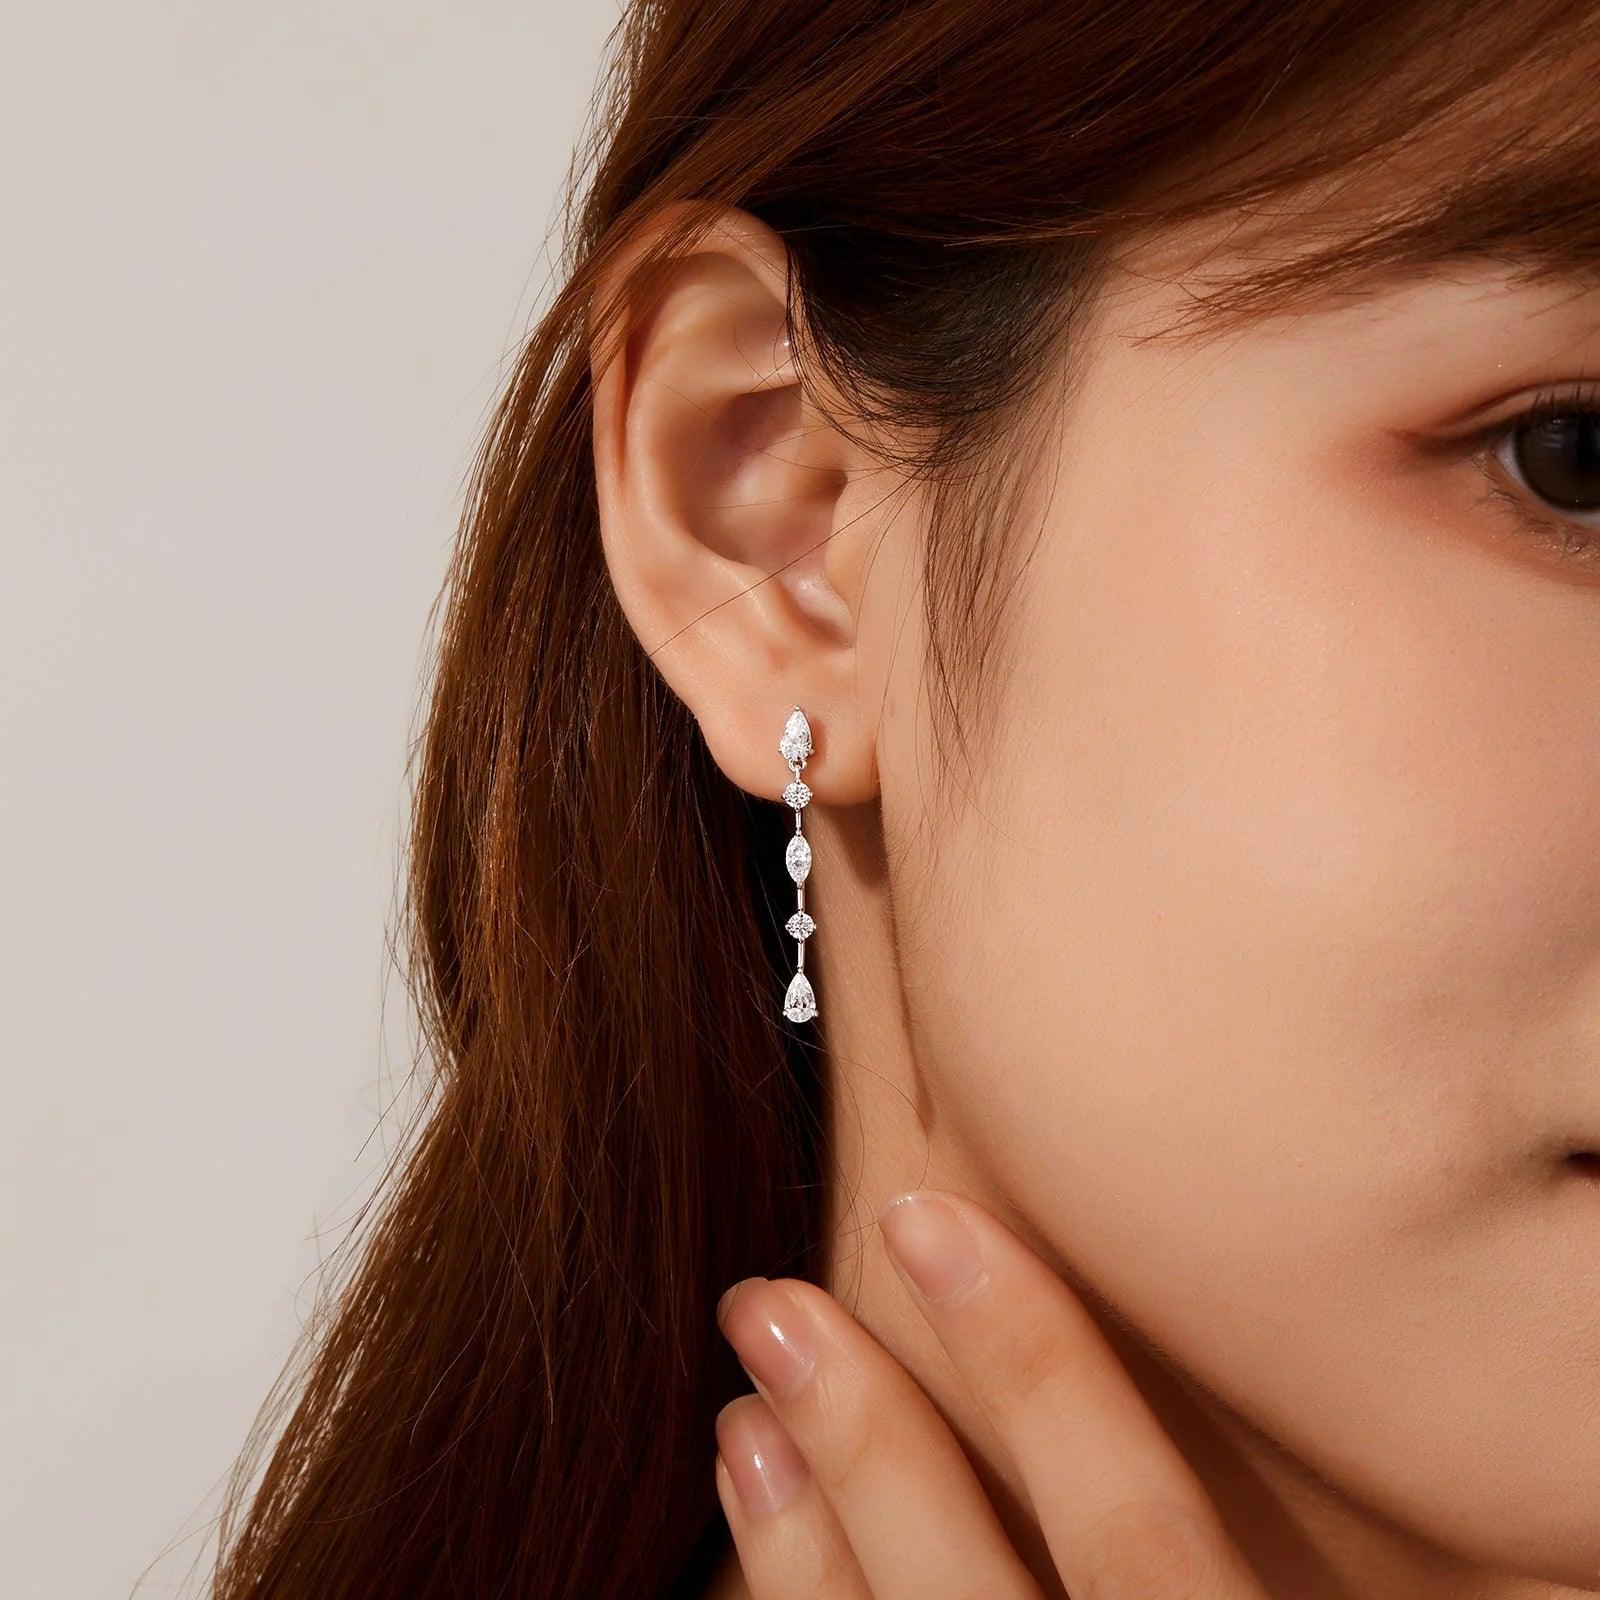 Exquisite Linear Drop Earrings